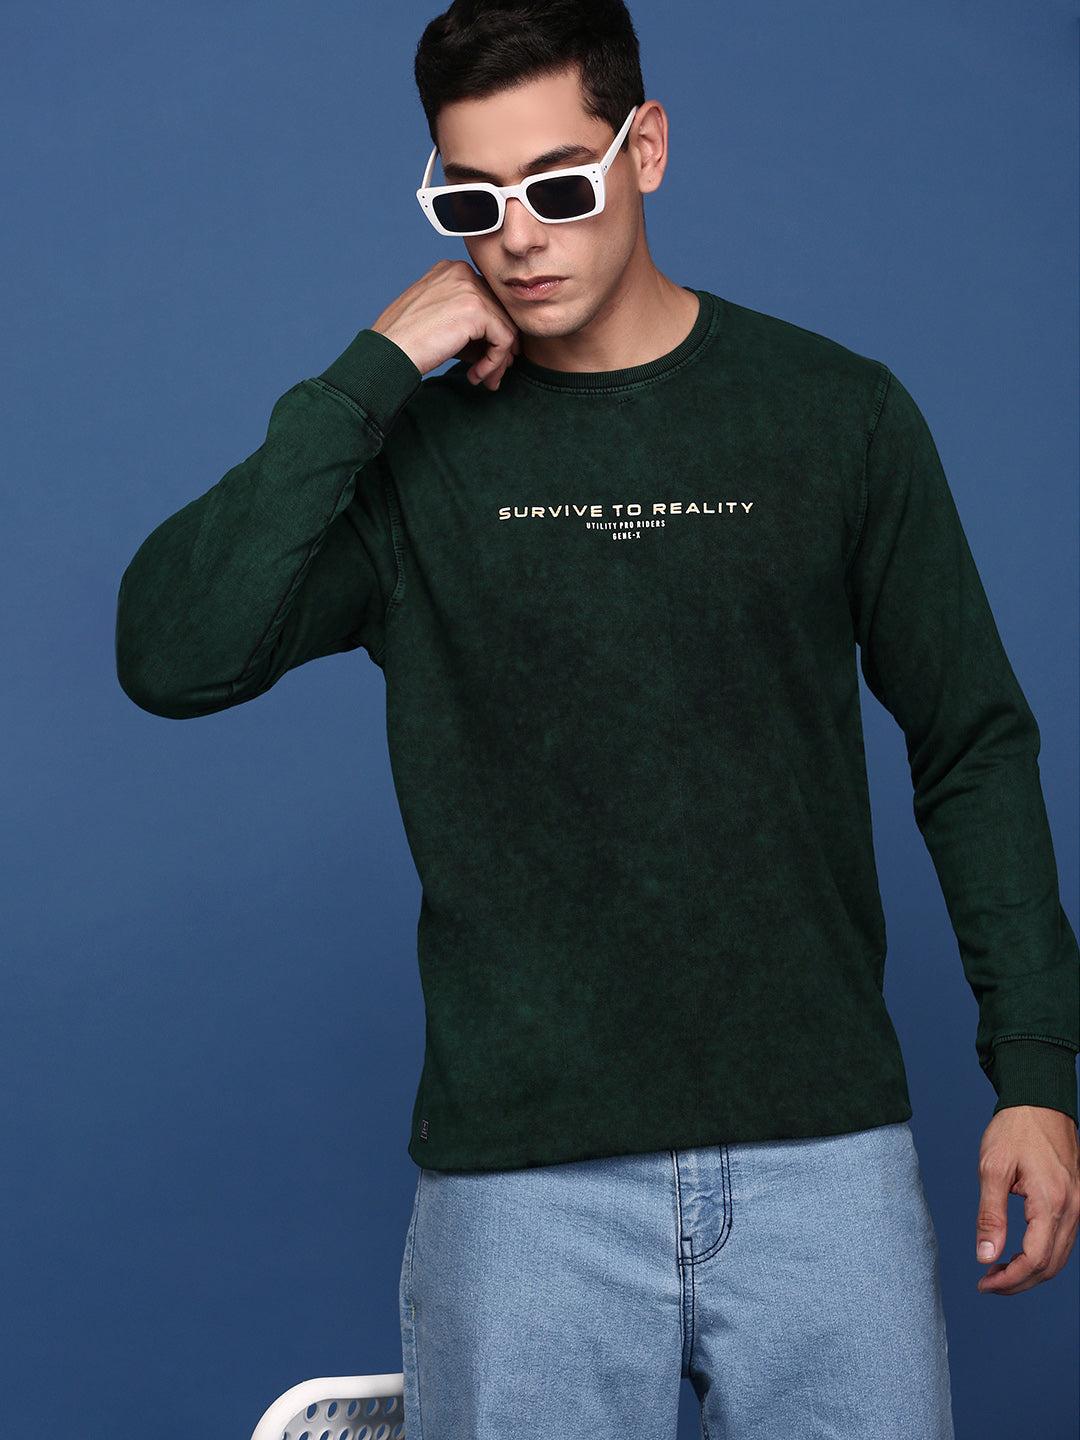 Men Round Neck Solid Green Pullover